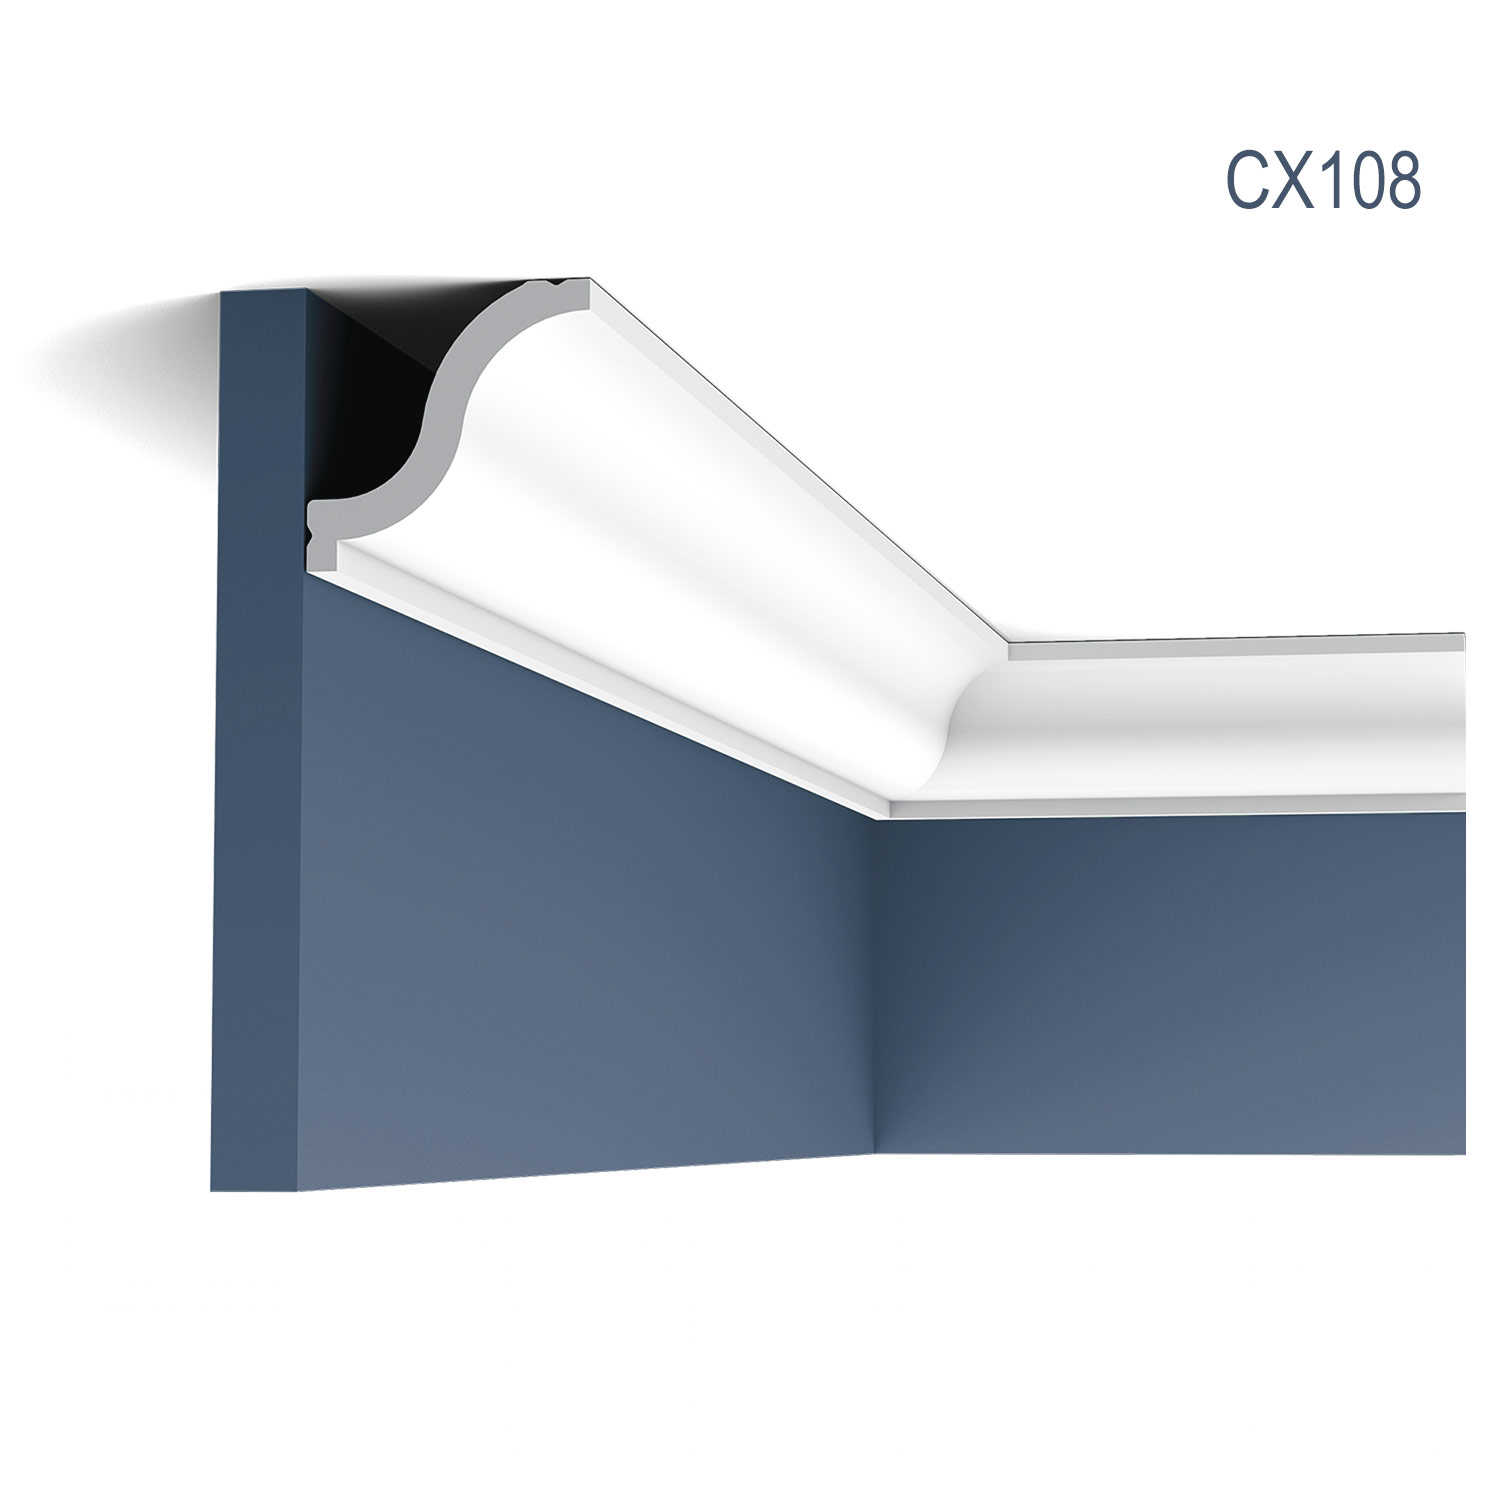 Cornisa Axxent CX108, Dimensiuni: 200 X 5.4 X 5.5 cm, Orac Decor